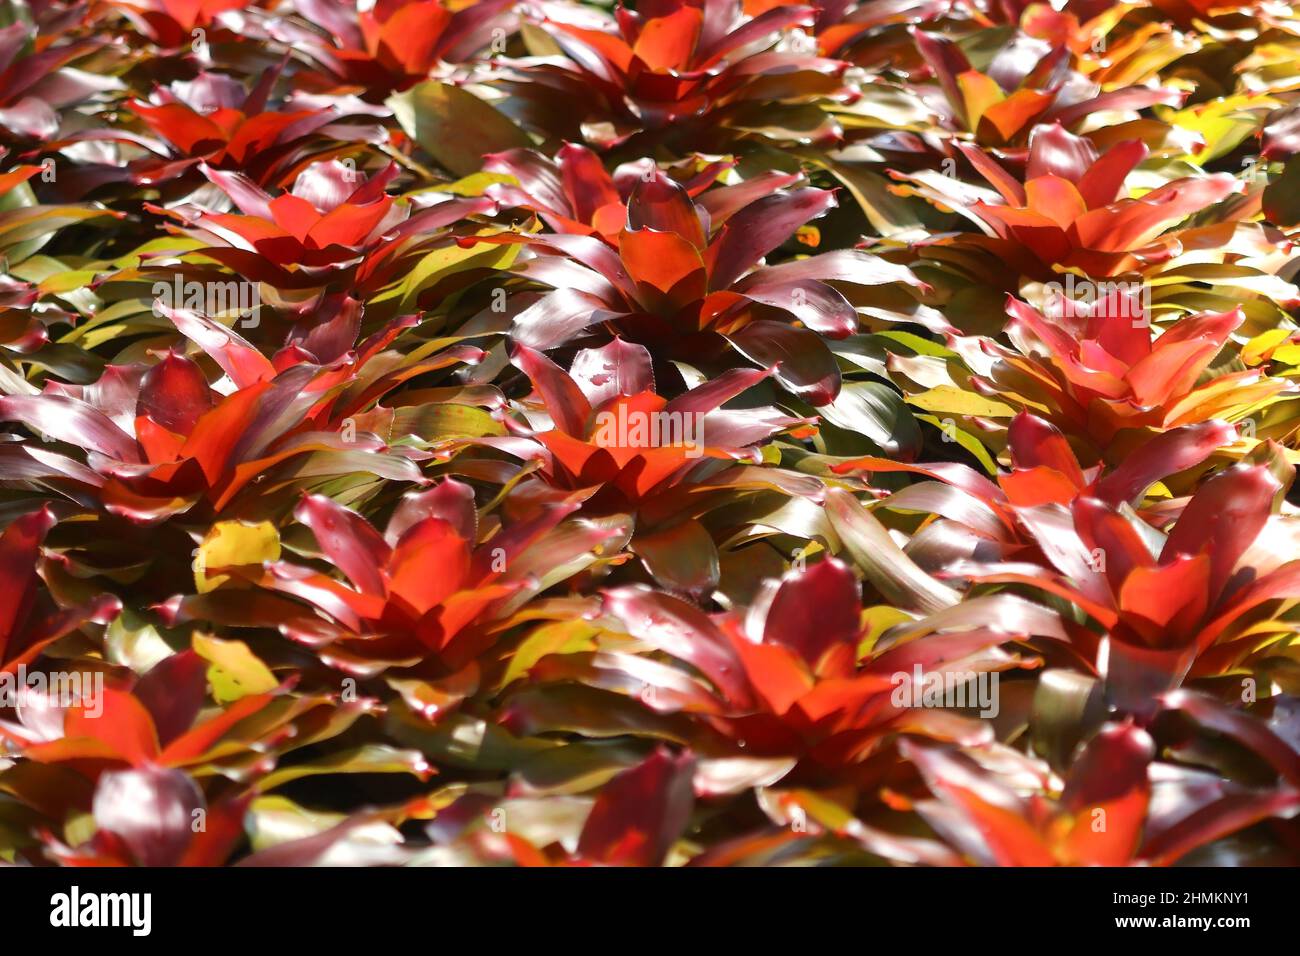 photo of bromeliad guzmania magnifica flower in garden Stock Photo